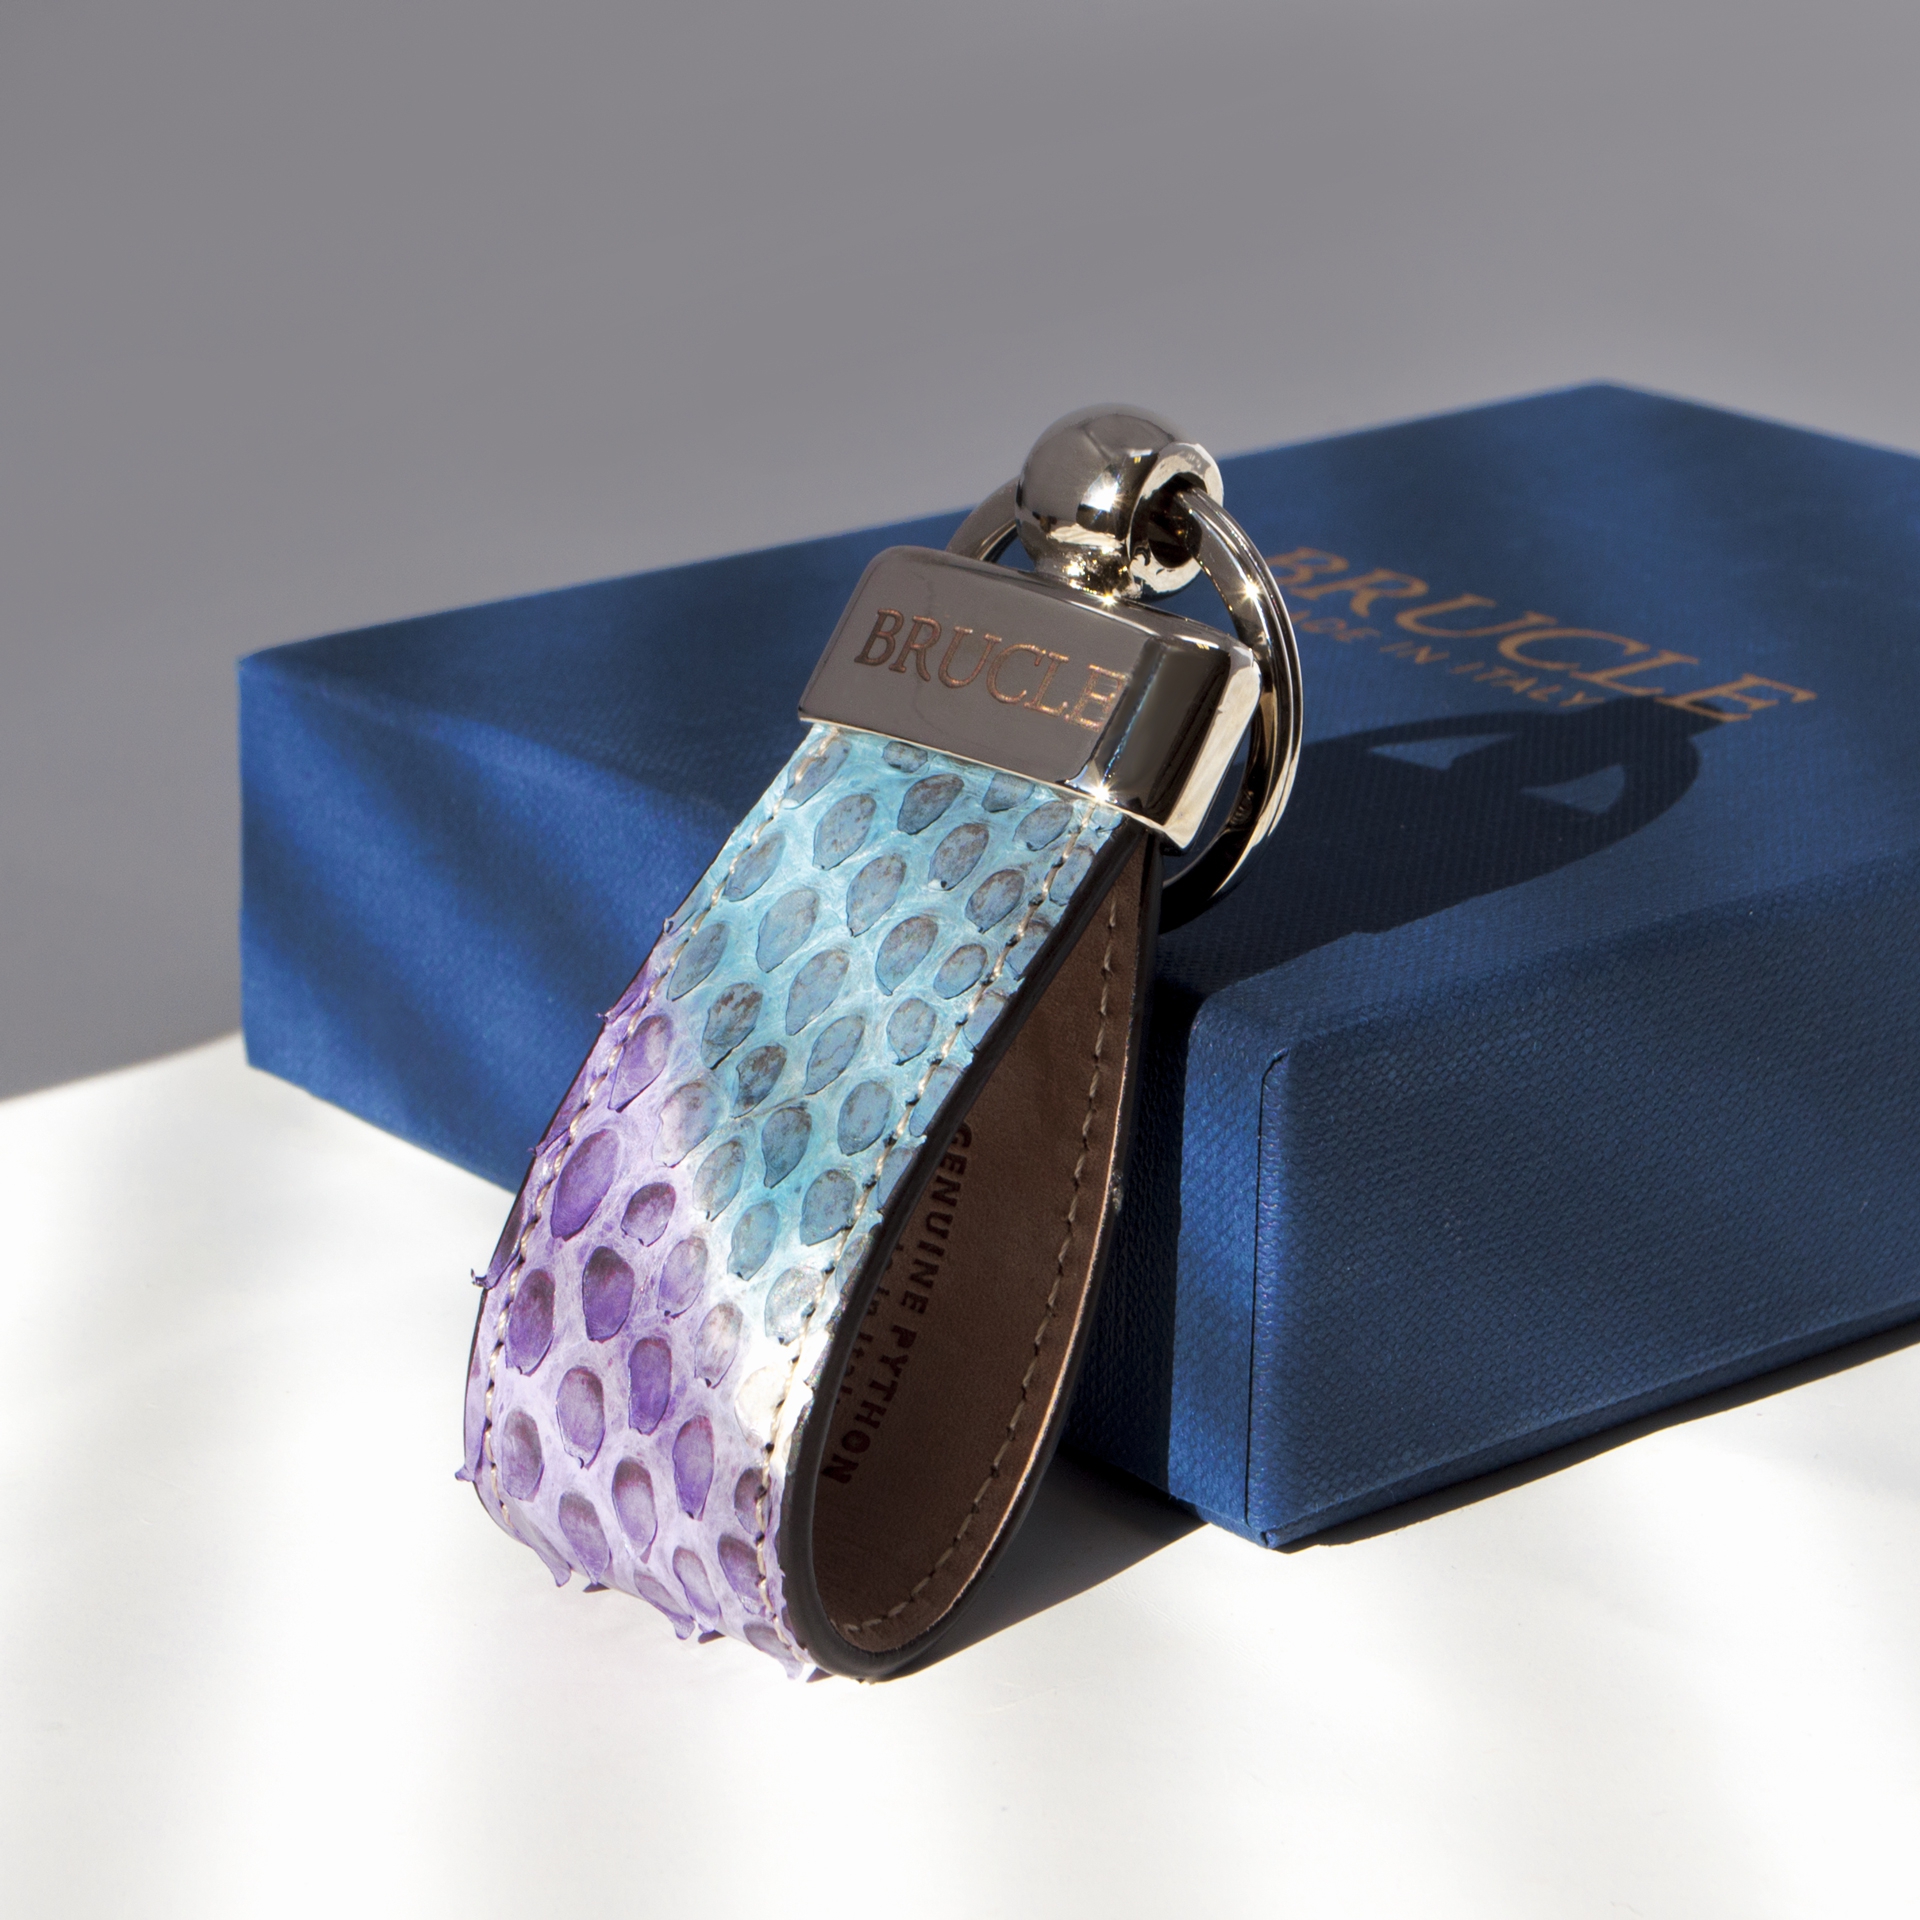 Genuine Python Leather keychain multicolor purple